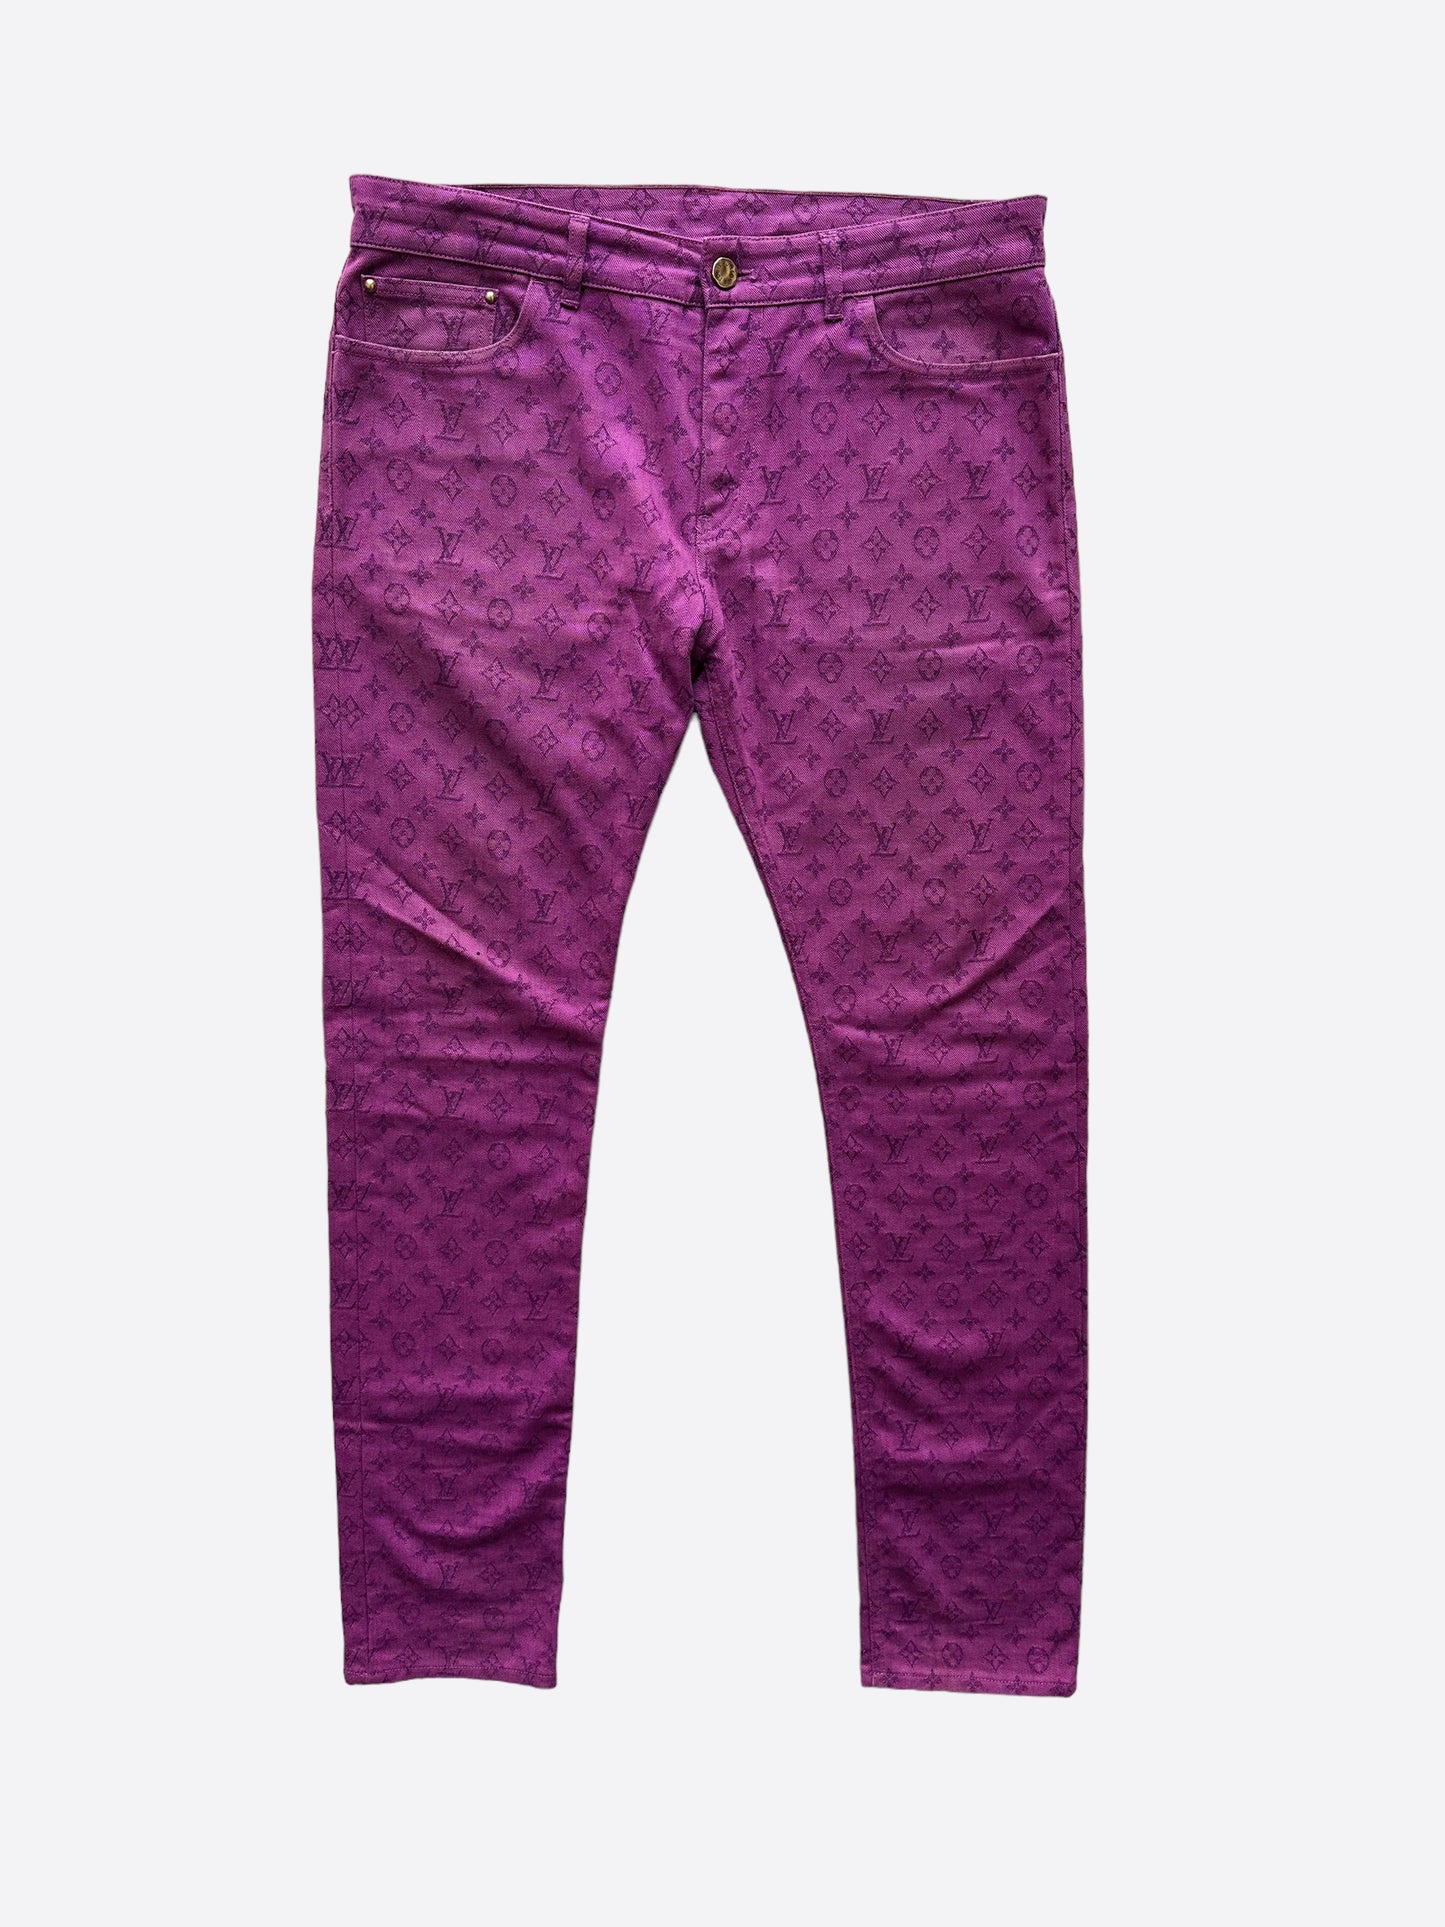 Louis Vuitton Monogram Slim Jeans In purple denim